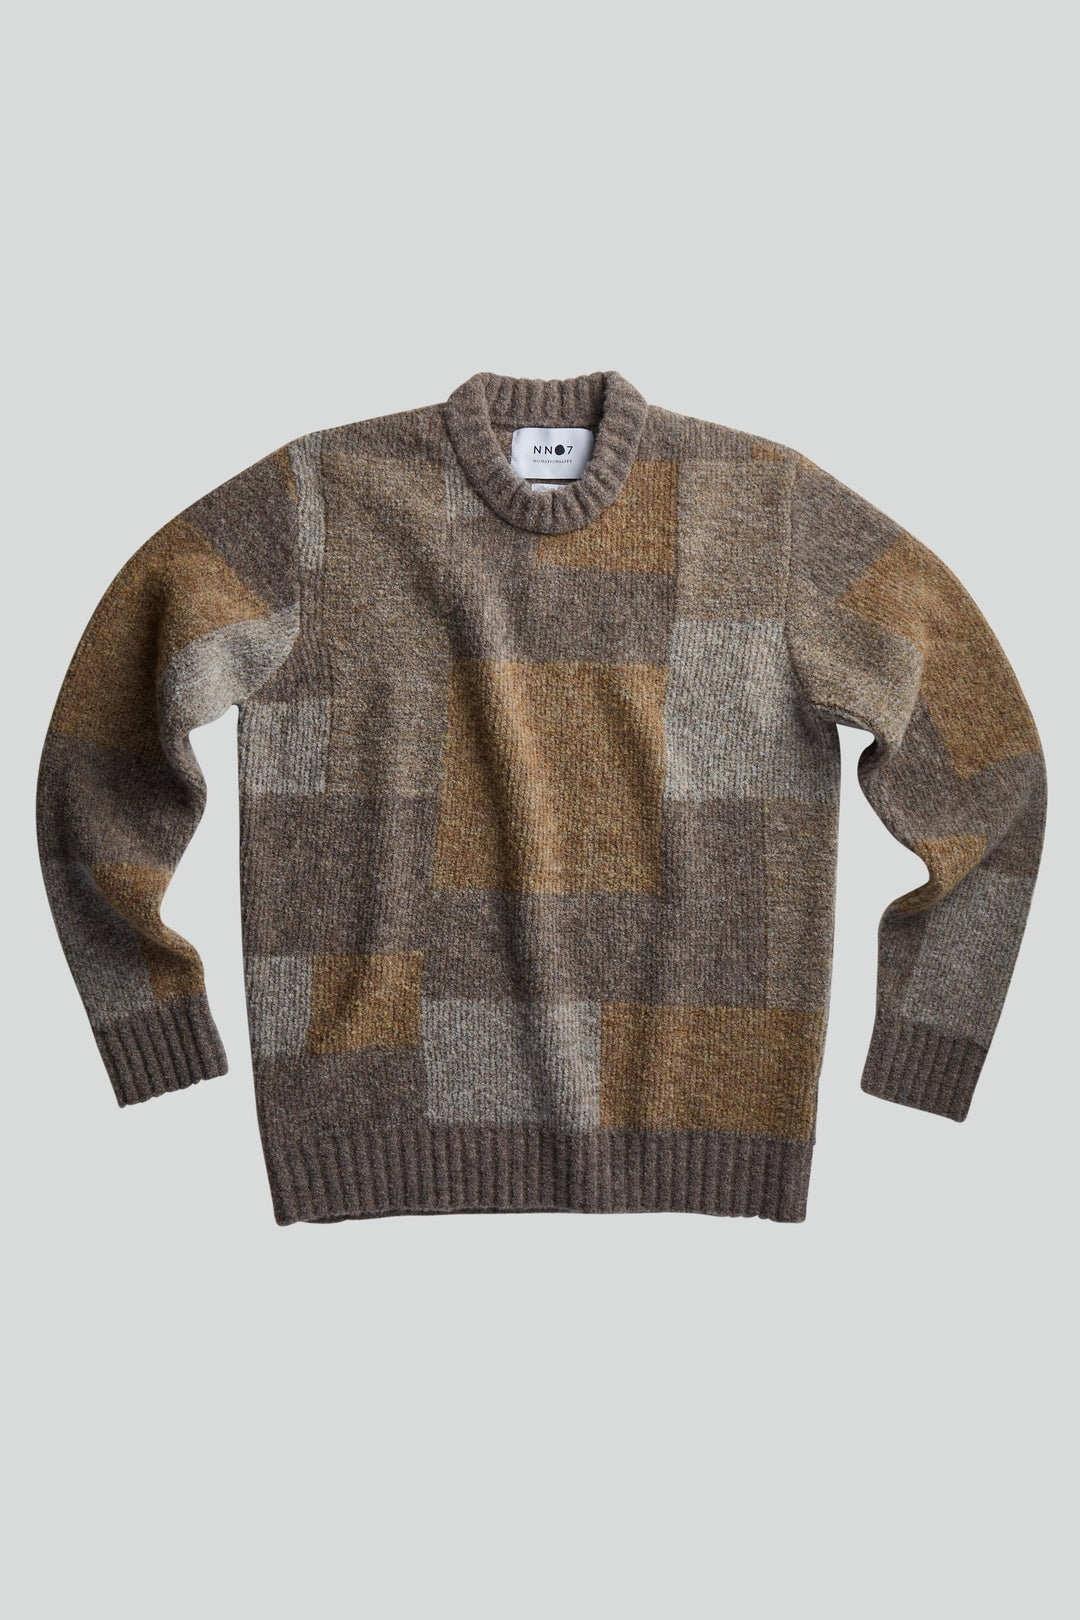 NN07 - Brady 6531 Crewneck Sweater in Camel Multi | Buster McGee